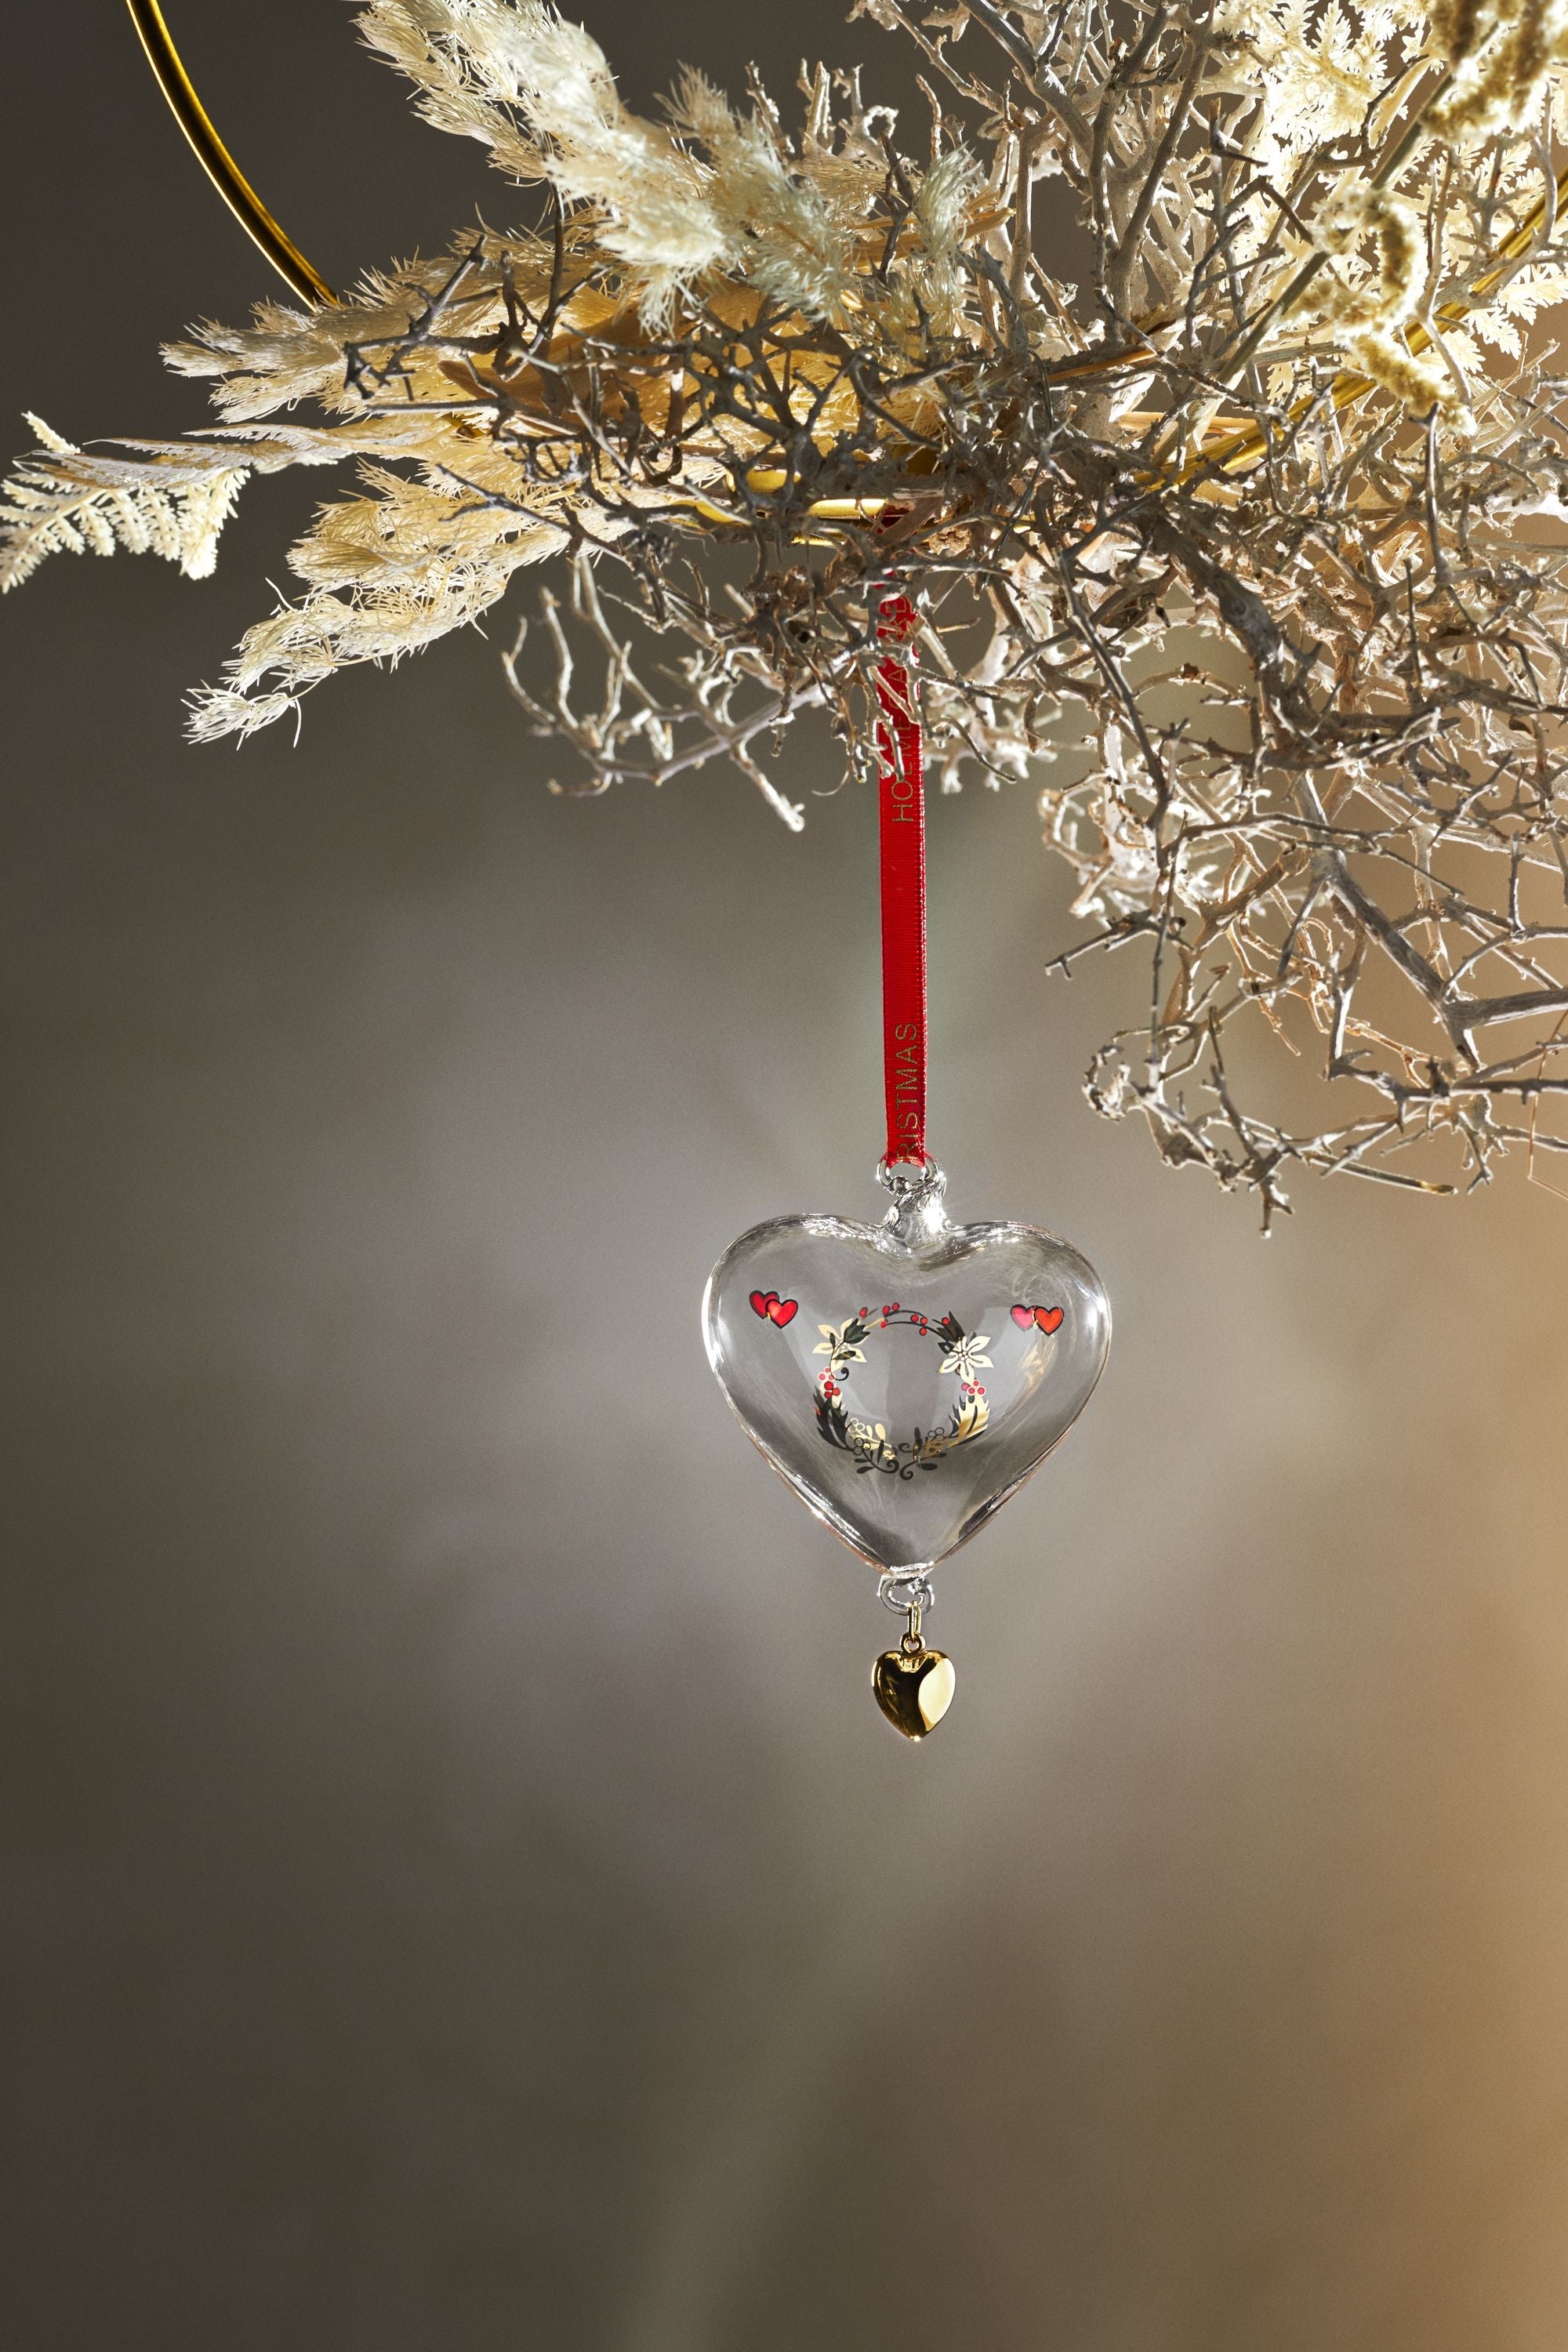 Holmegaard Ann Sofi Romme Heart anual de Navidad, pequeño